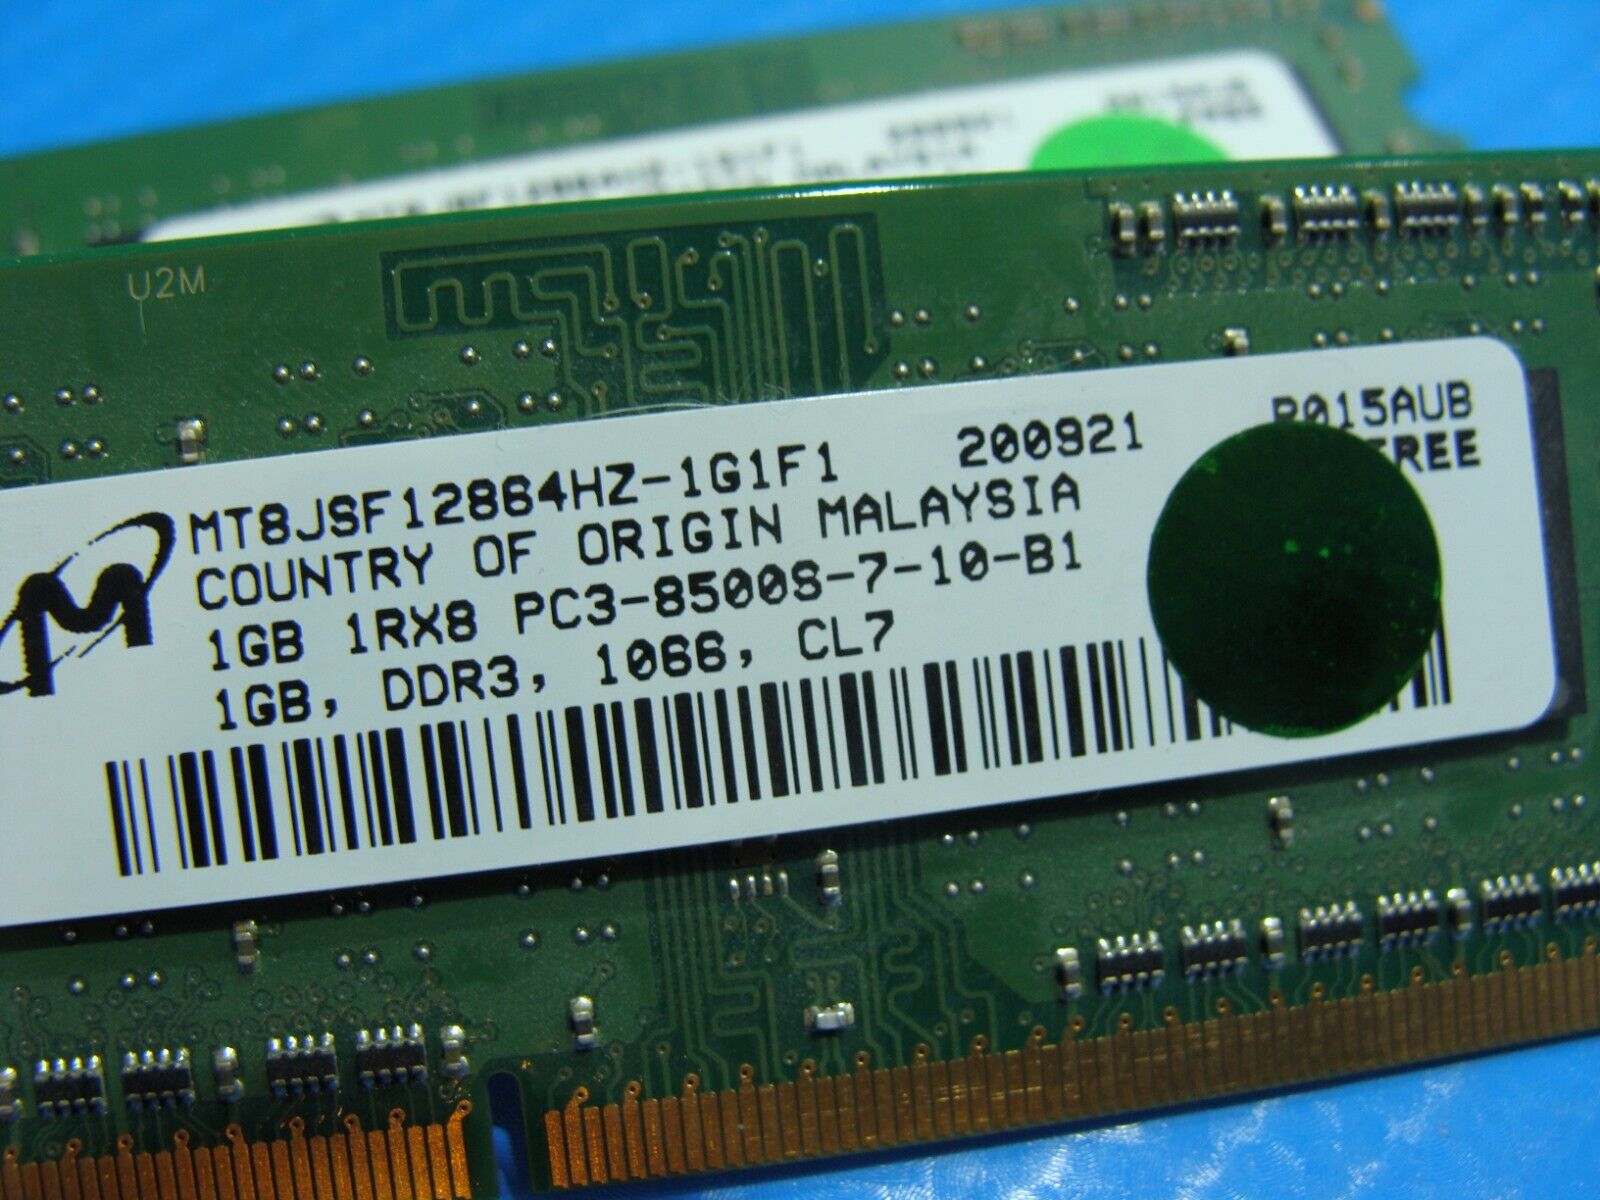 MacBook Pro A1278 Micron 2GB (2x1GB) PC3-8500S Memory RAM SO-DIMM 661-5225